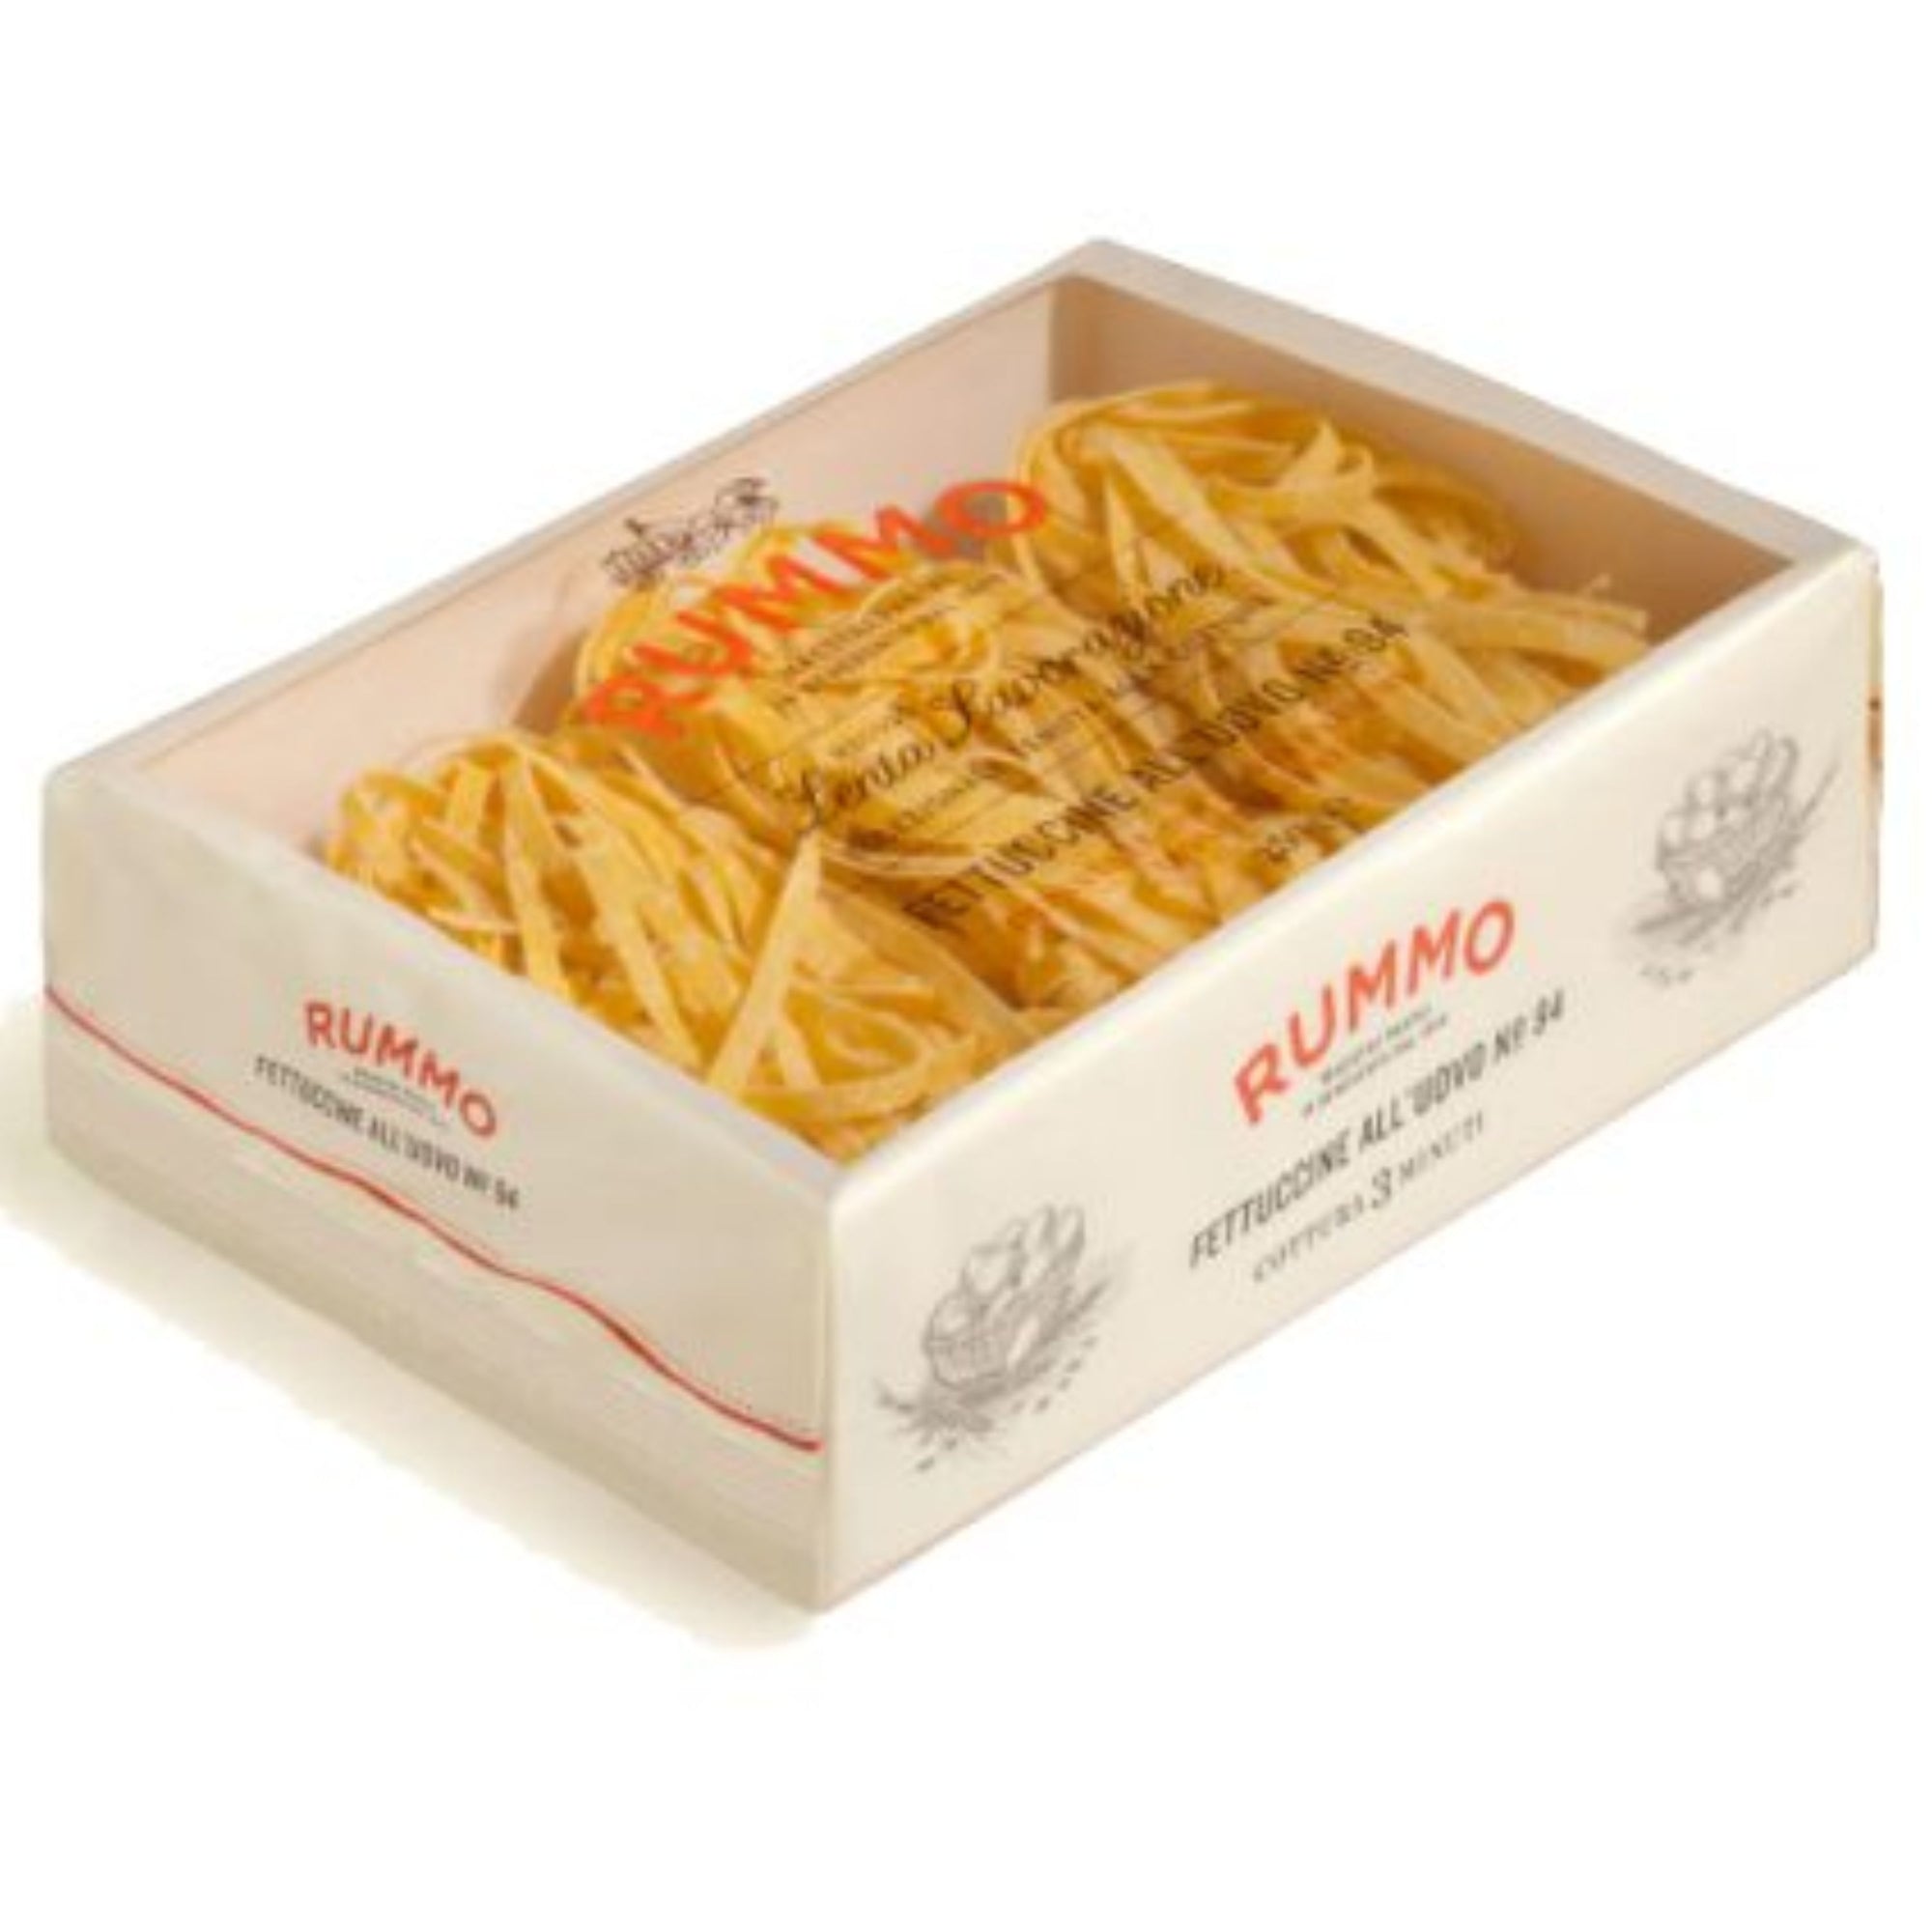 Fettuccine Nidi Uovo 'Rummo' 250g